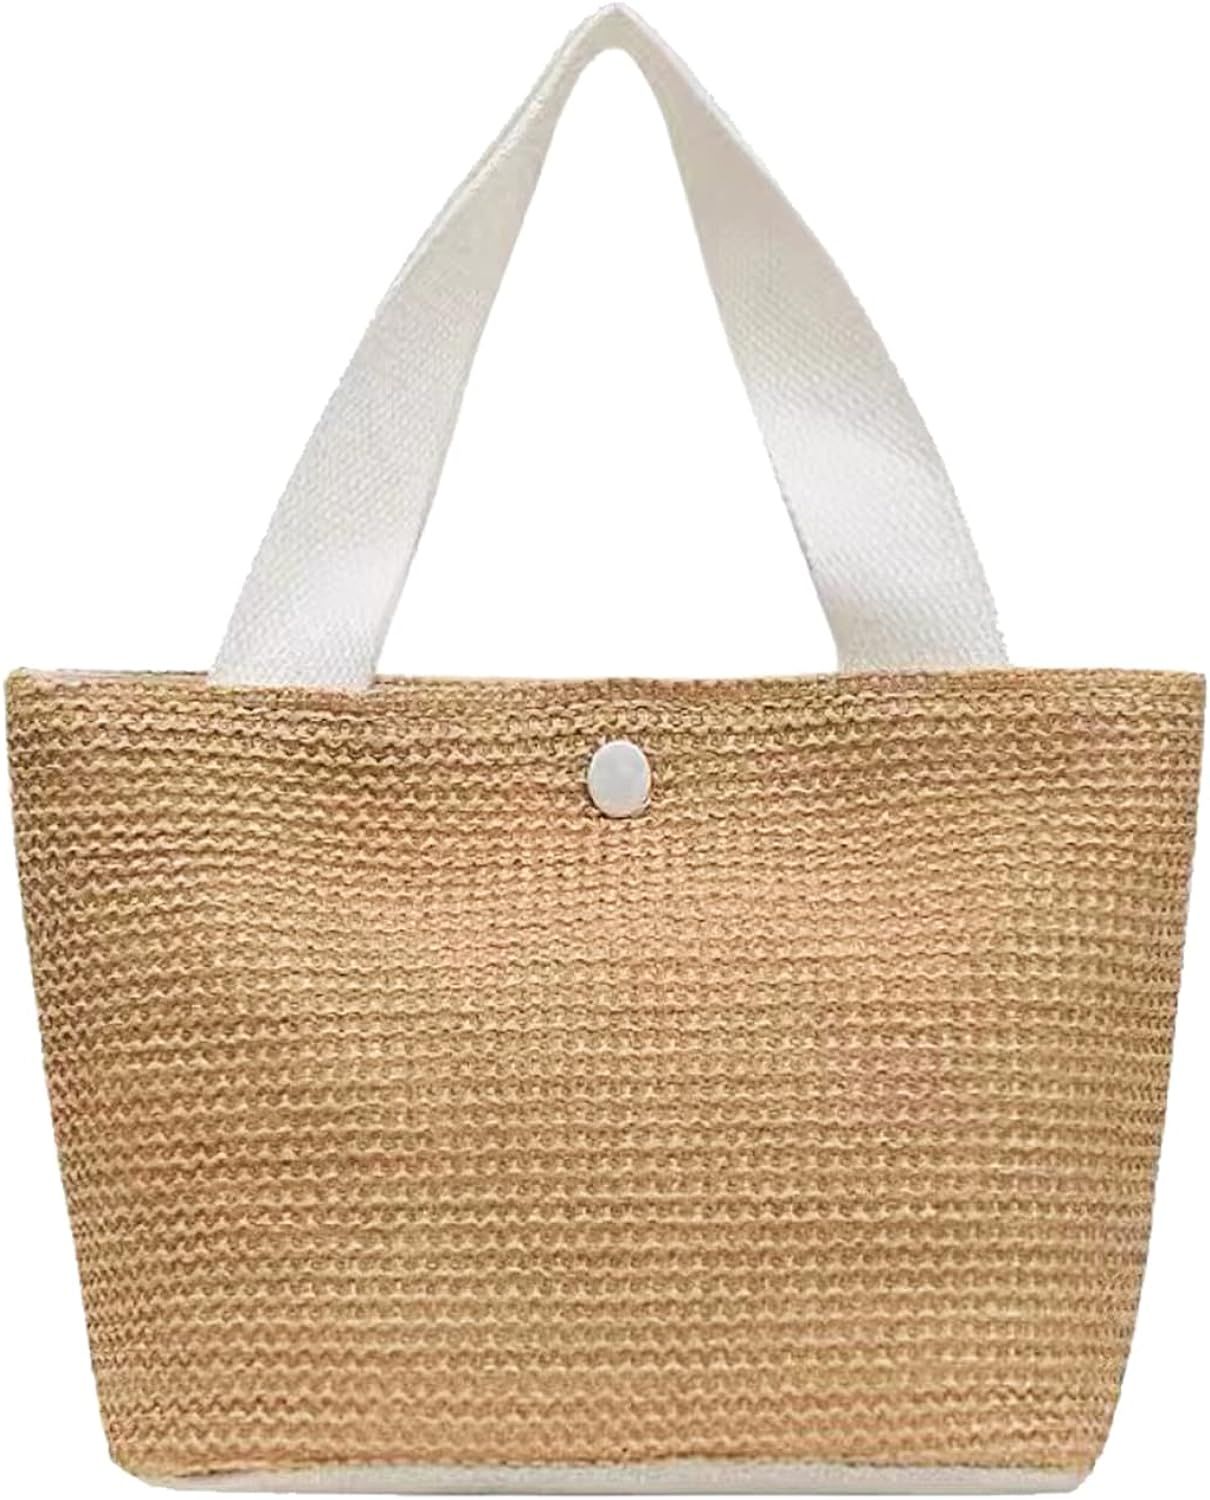 pfoosnd Straw Beach Bag,Women Hobo Summer Woven Large Handbags Straw Tote Bag with Lining Pockets... | Amazon (US)